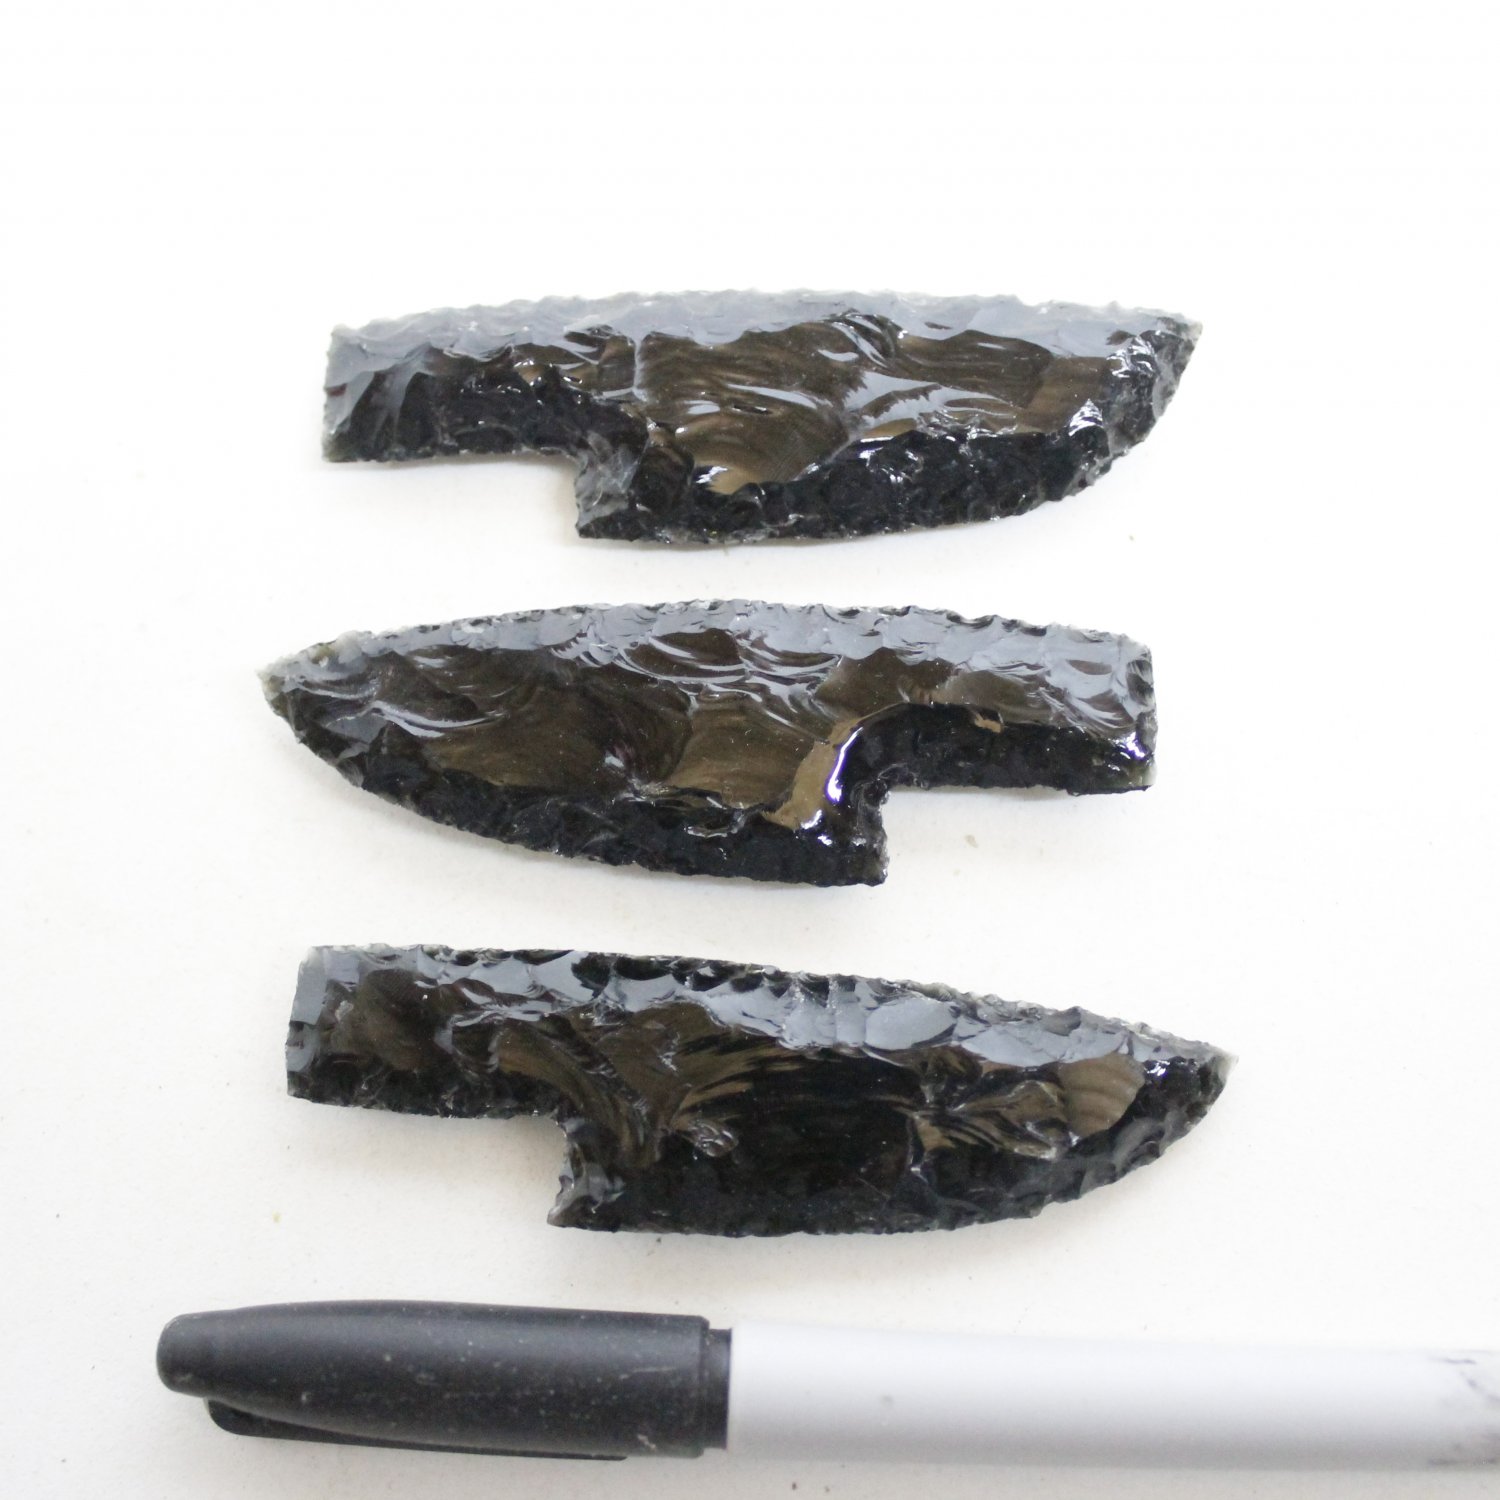 obsidian scalpel so sharp no bleeding